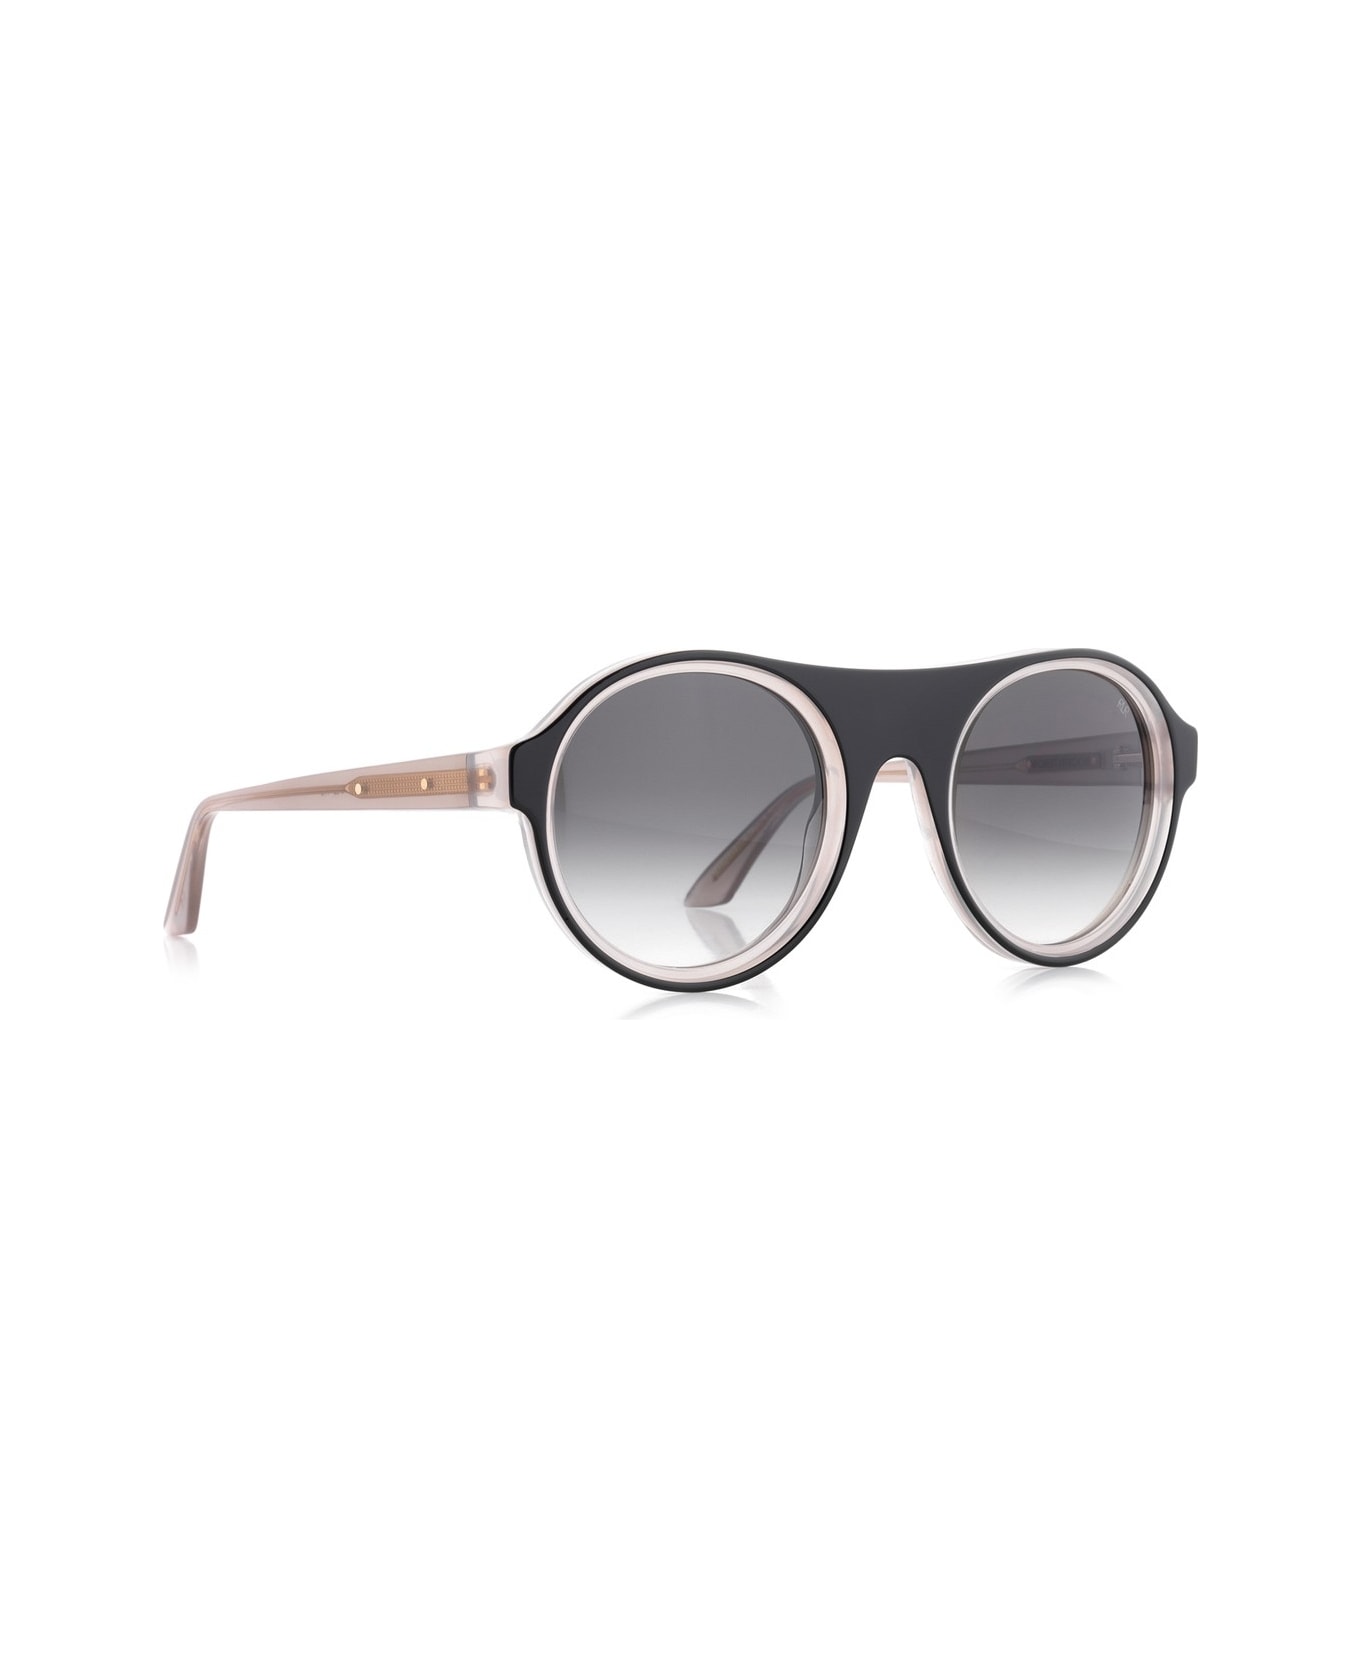 Robert La Roche Rlr S300 Sunglasses - Nero サングラス